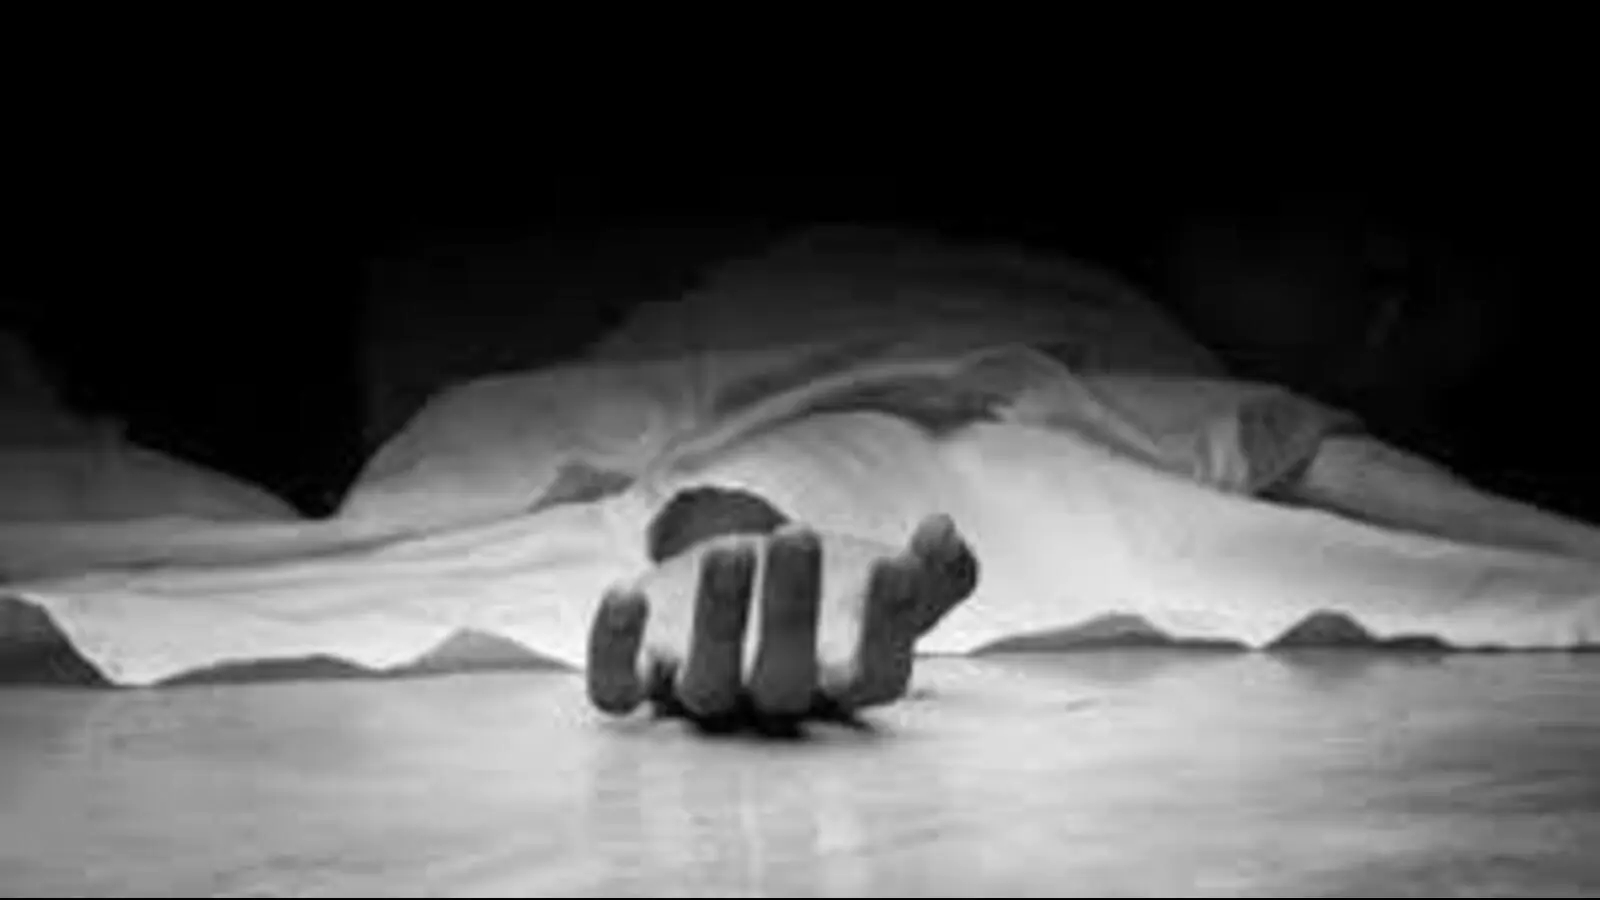 HIV positive man dies by suicide in Kerala